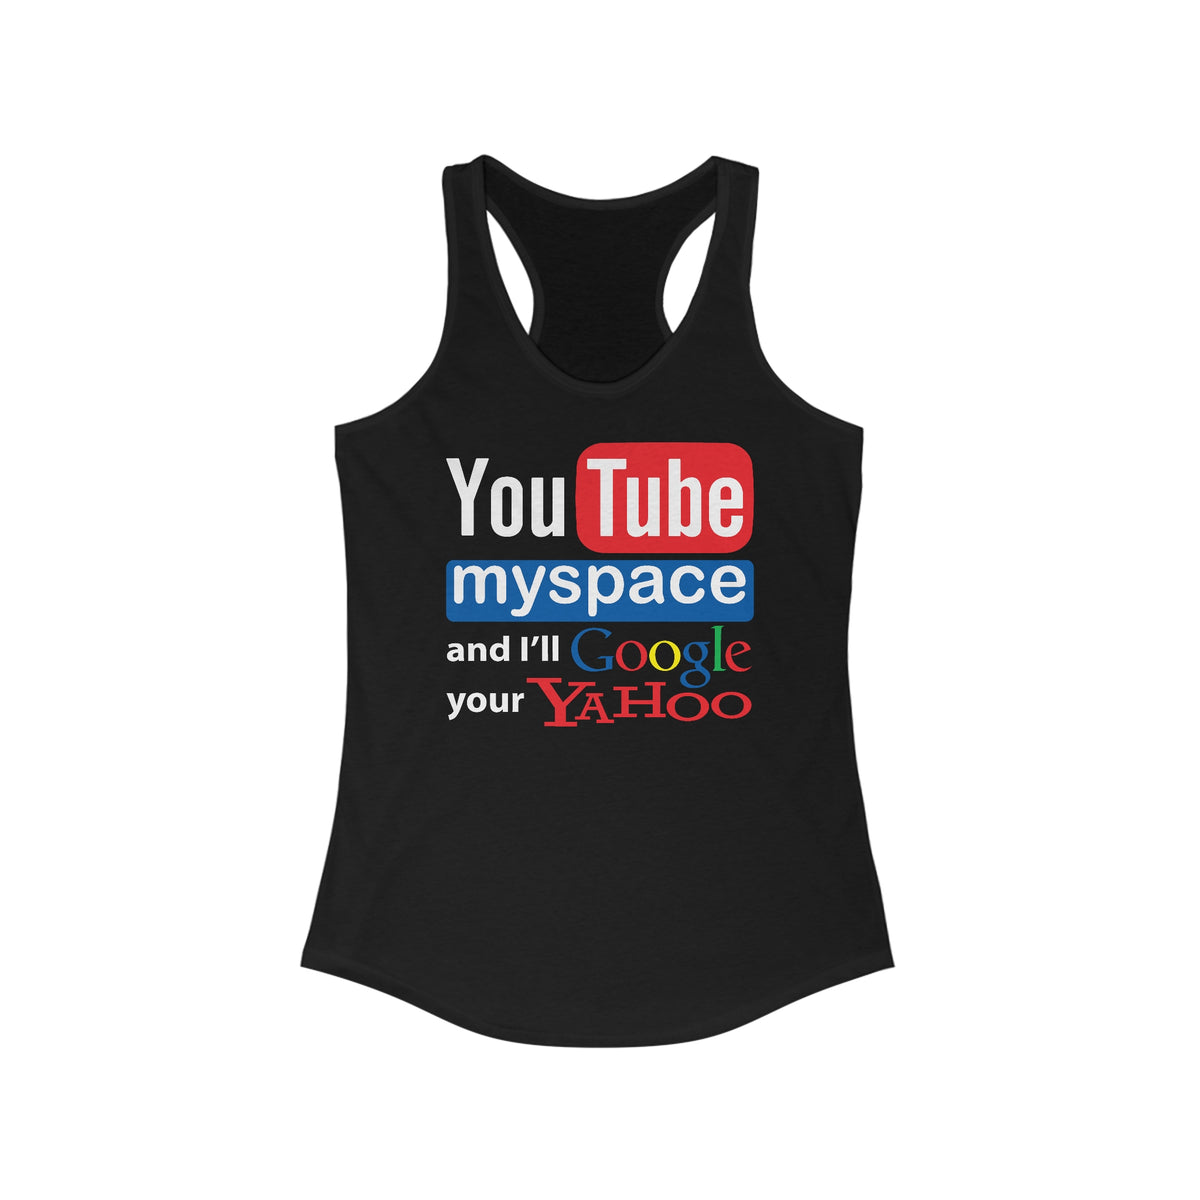 Youtube Myspace And I'll Google Your Yahoo - Women’s Racerback Tank